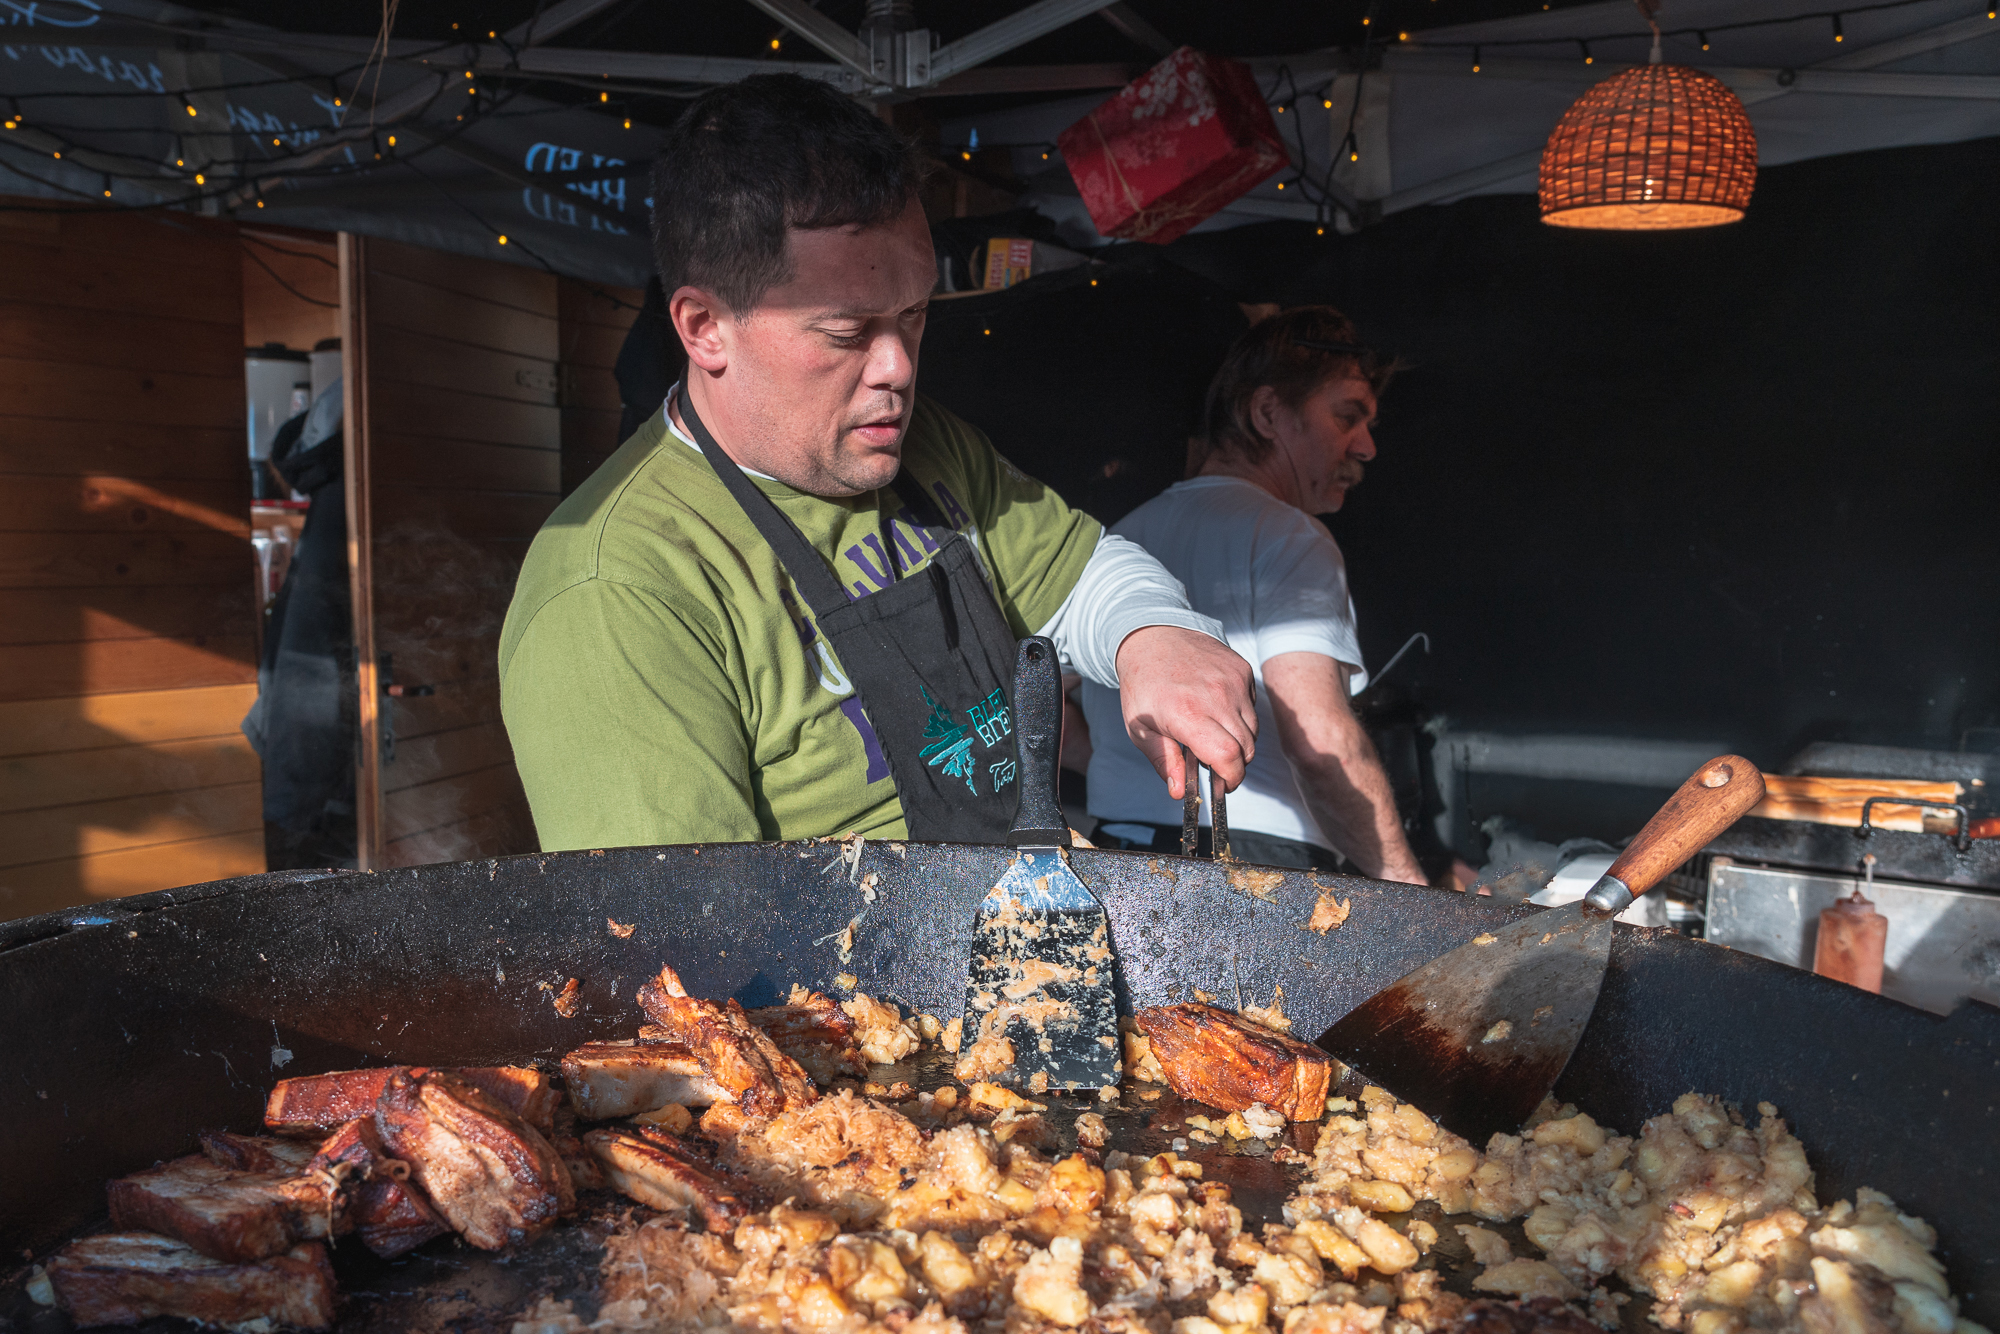 A vendor preparing food at Bled Christmas Market